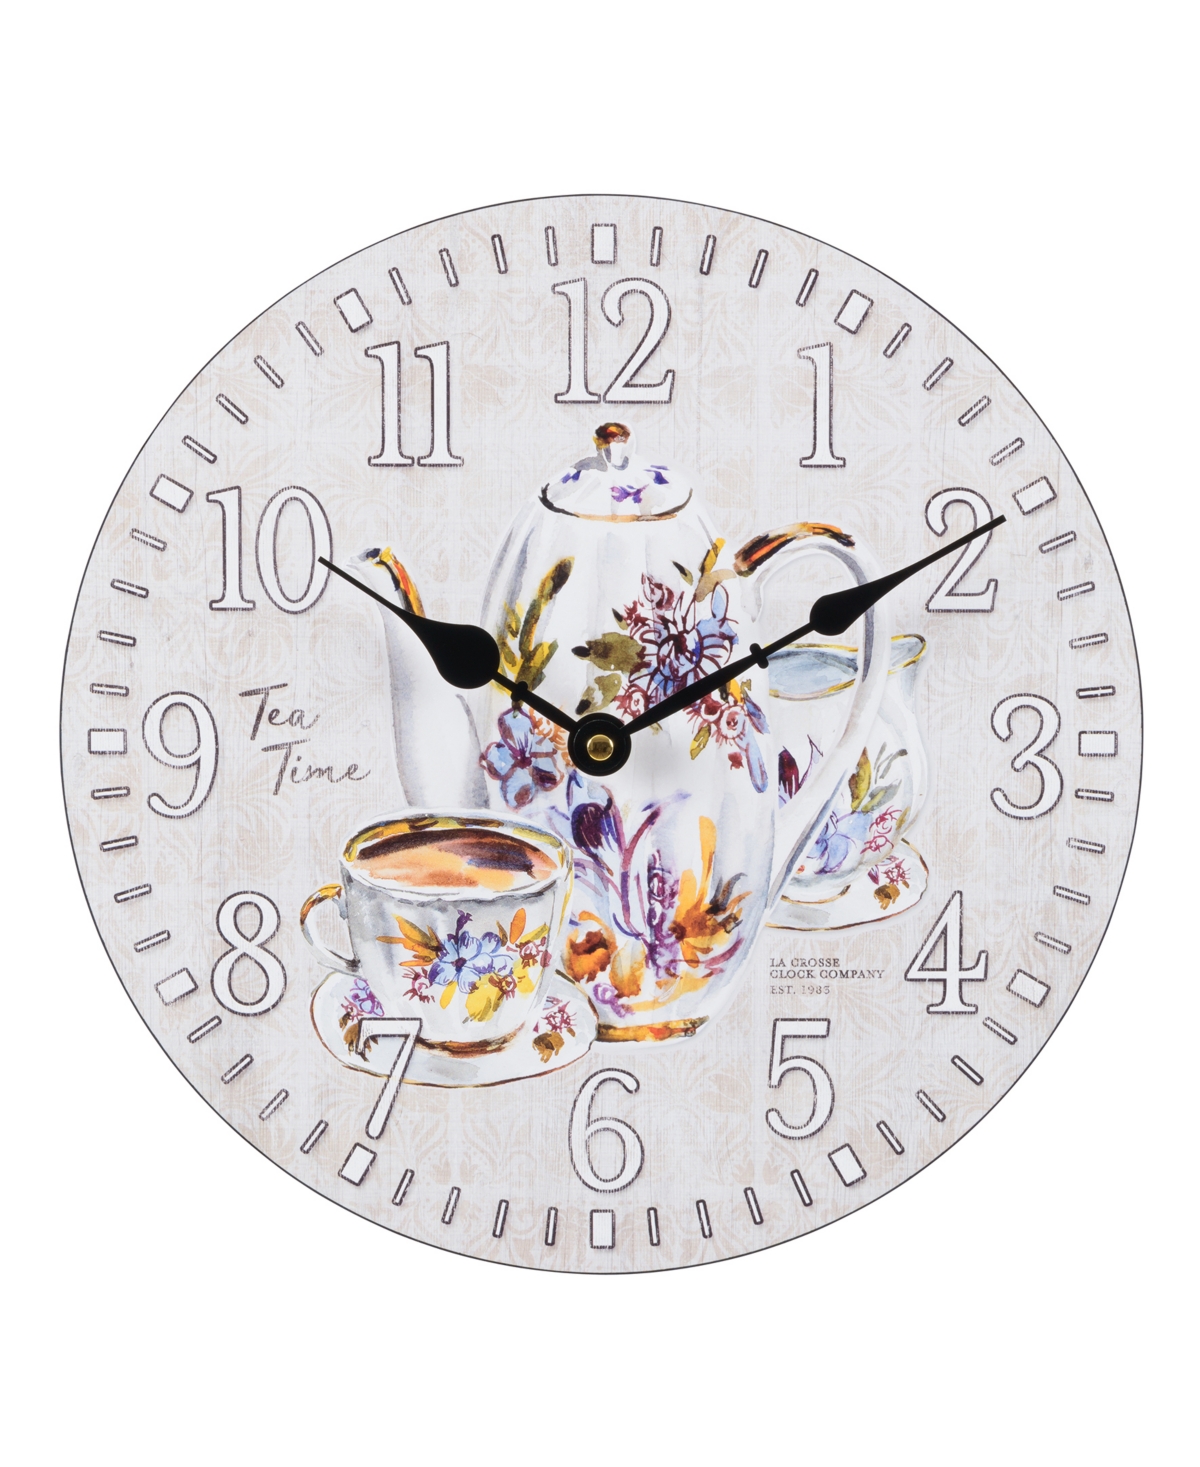 La Crosse Technology Clock 404-2631t-int 12" Tea Time Quartz Wall Clock In Multi